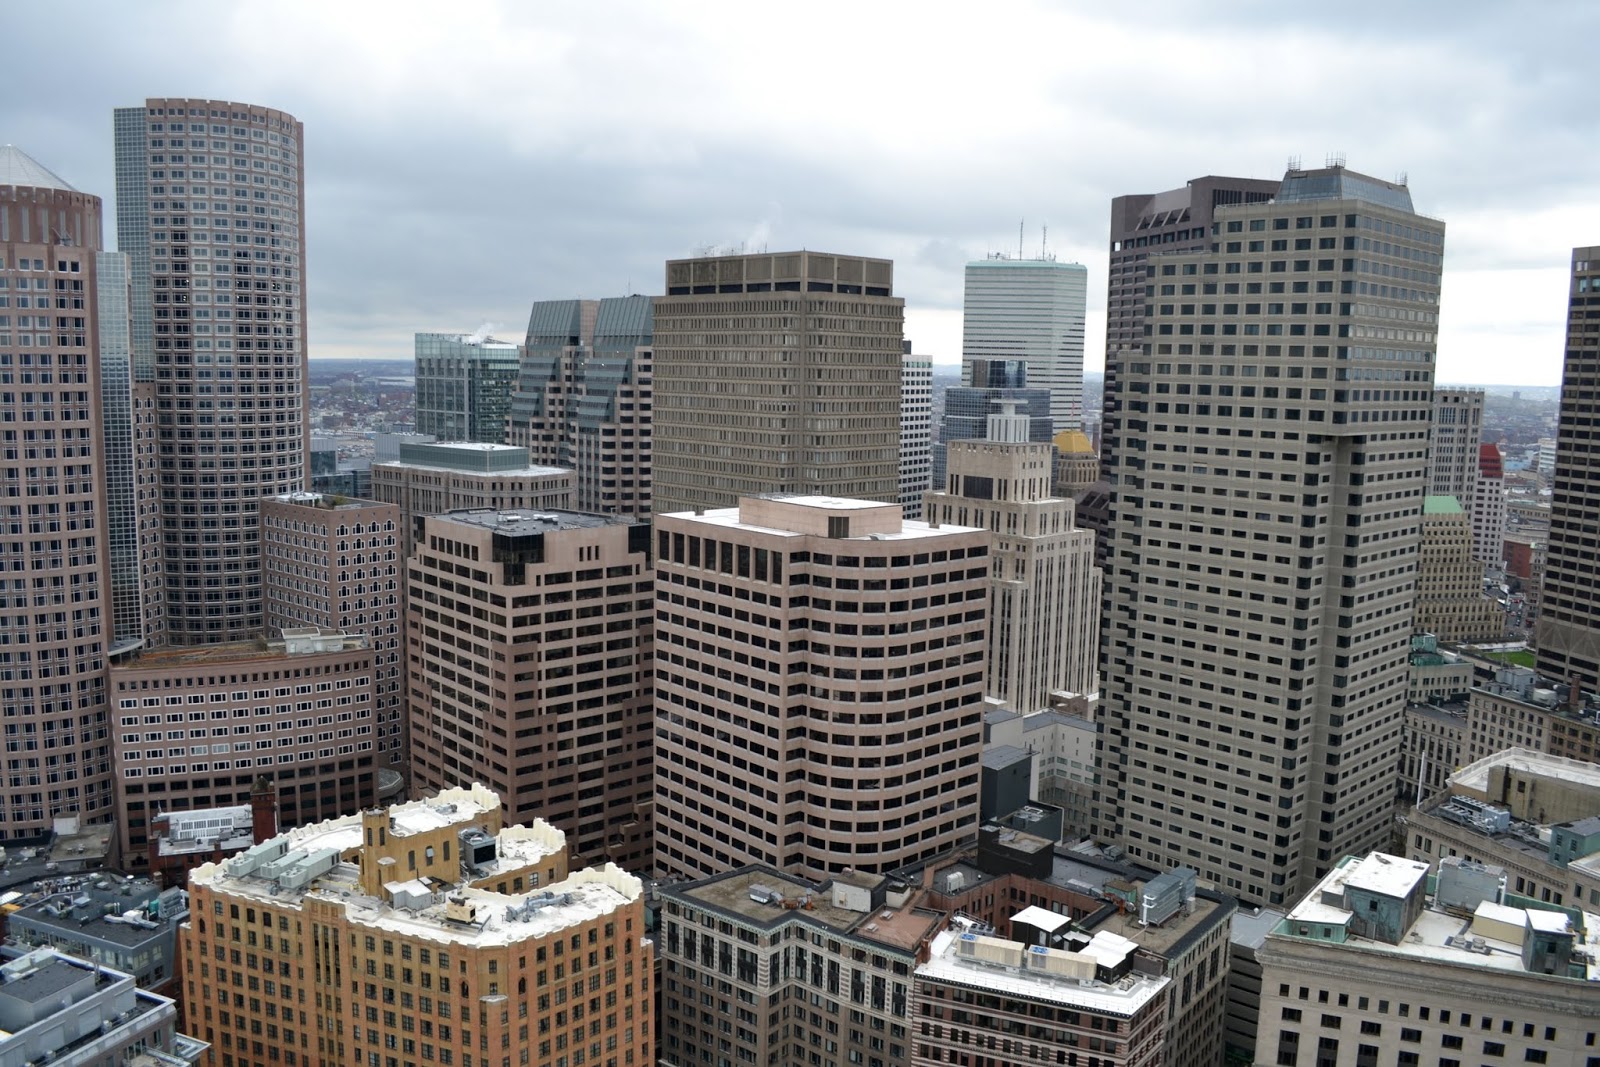 Cмотровая площадка в отеле Марриотт, Бостон, Массачусетс (Marriott Custom House observation deck, Boston, MA)